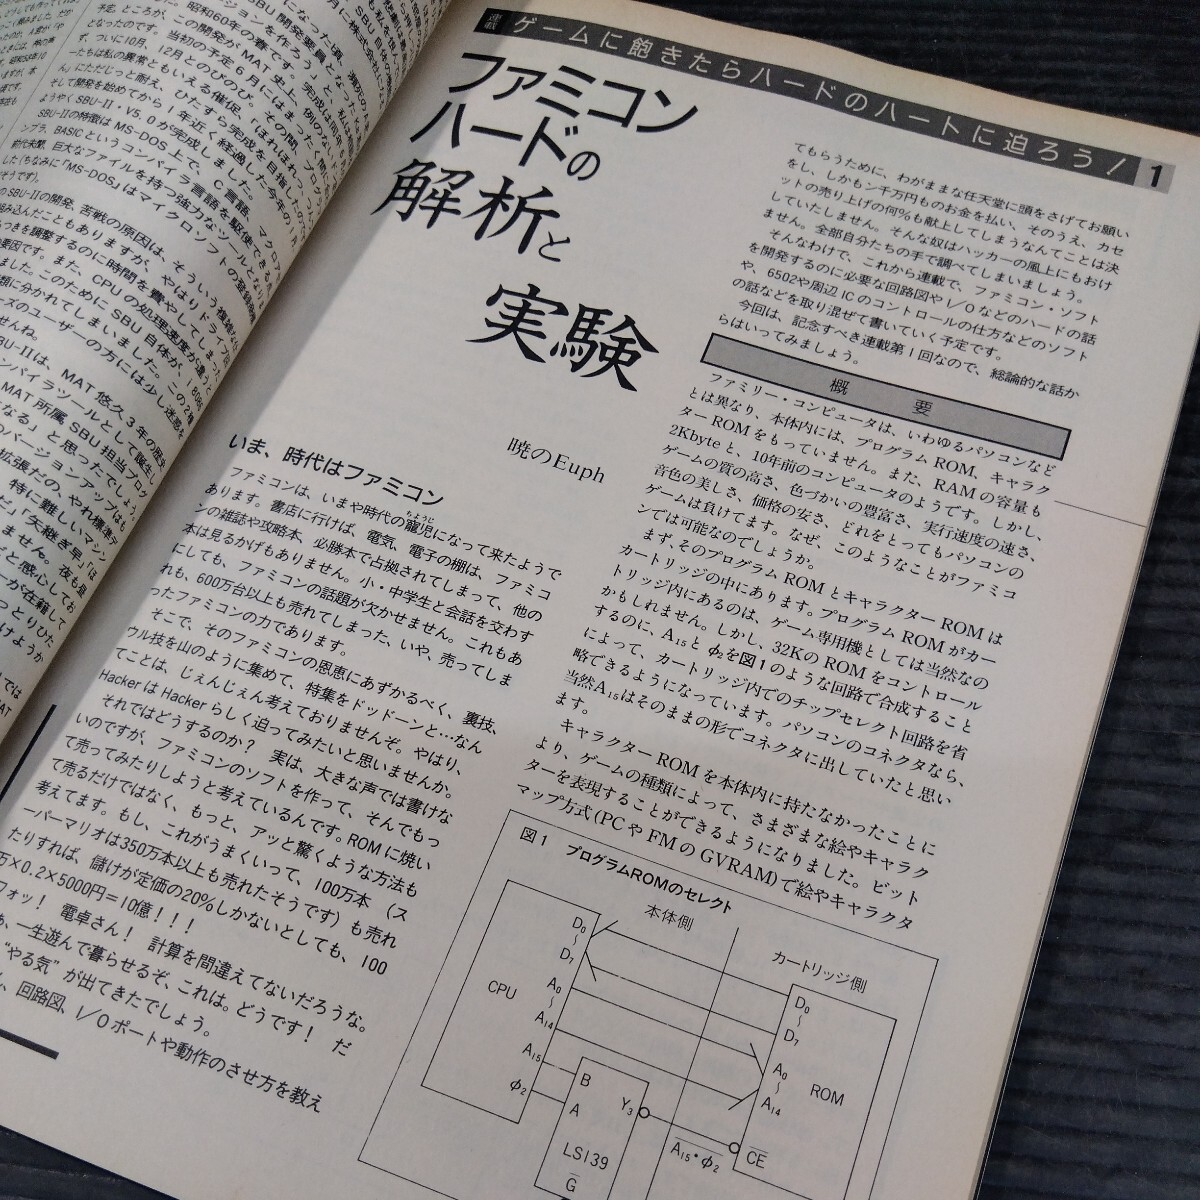 Hacker ハッカー 1986年9月4日号 雑誌 解析 裏情報誌 パソコン PC ファミコン ハード 改造マニュアル コピーツール 機能強化テクニック_画像7